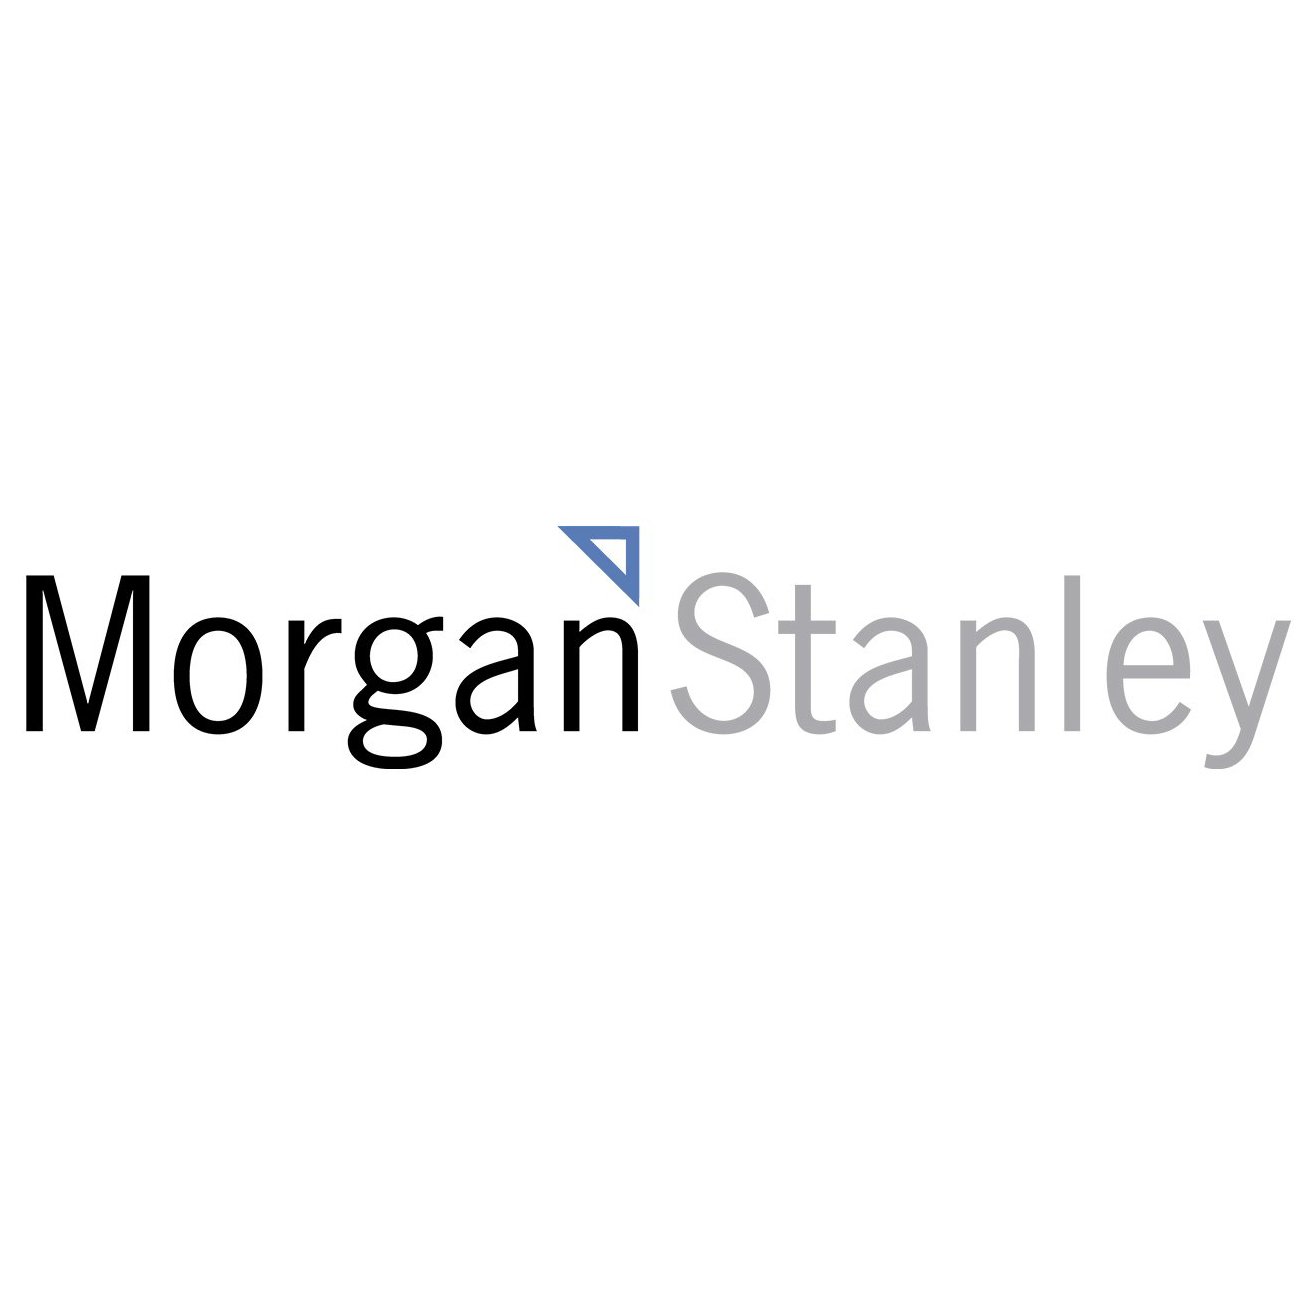 Morgan-Stanley-emblem.jpg